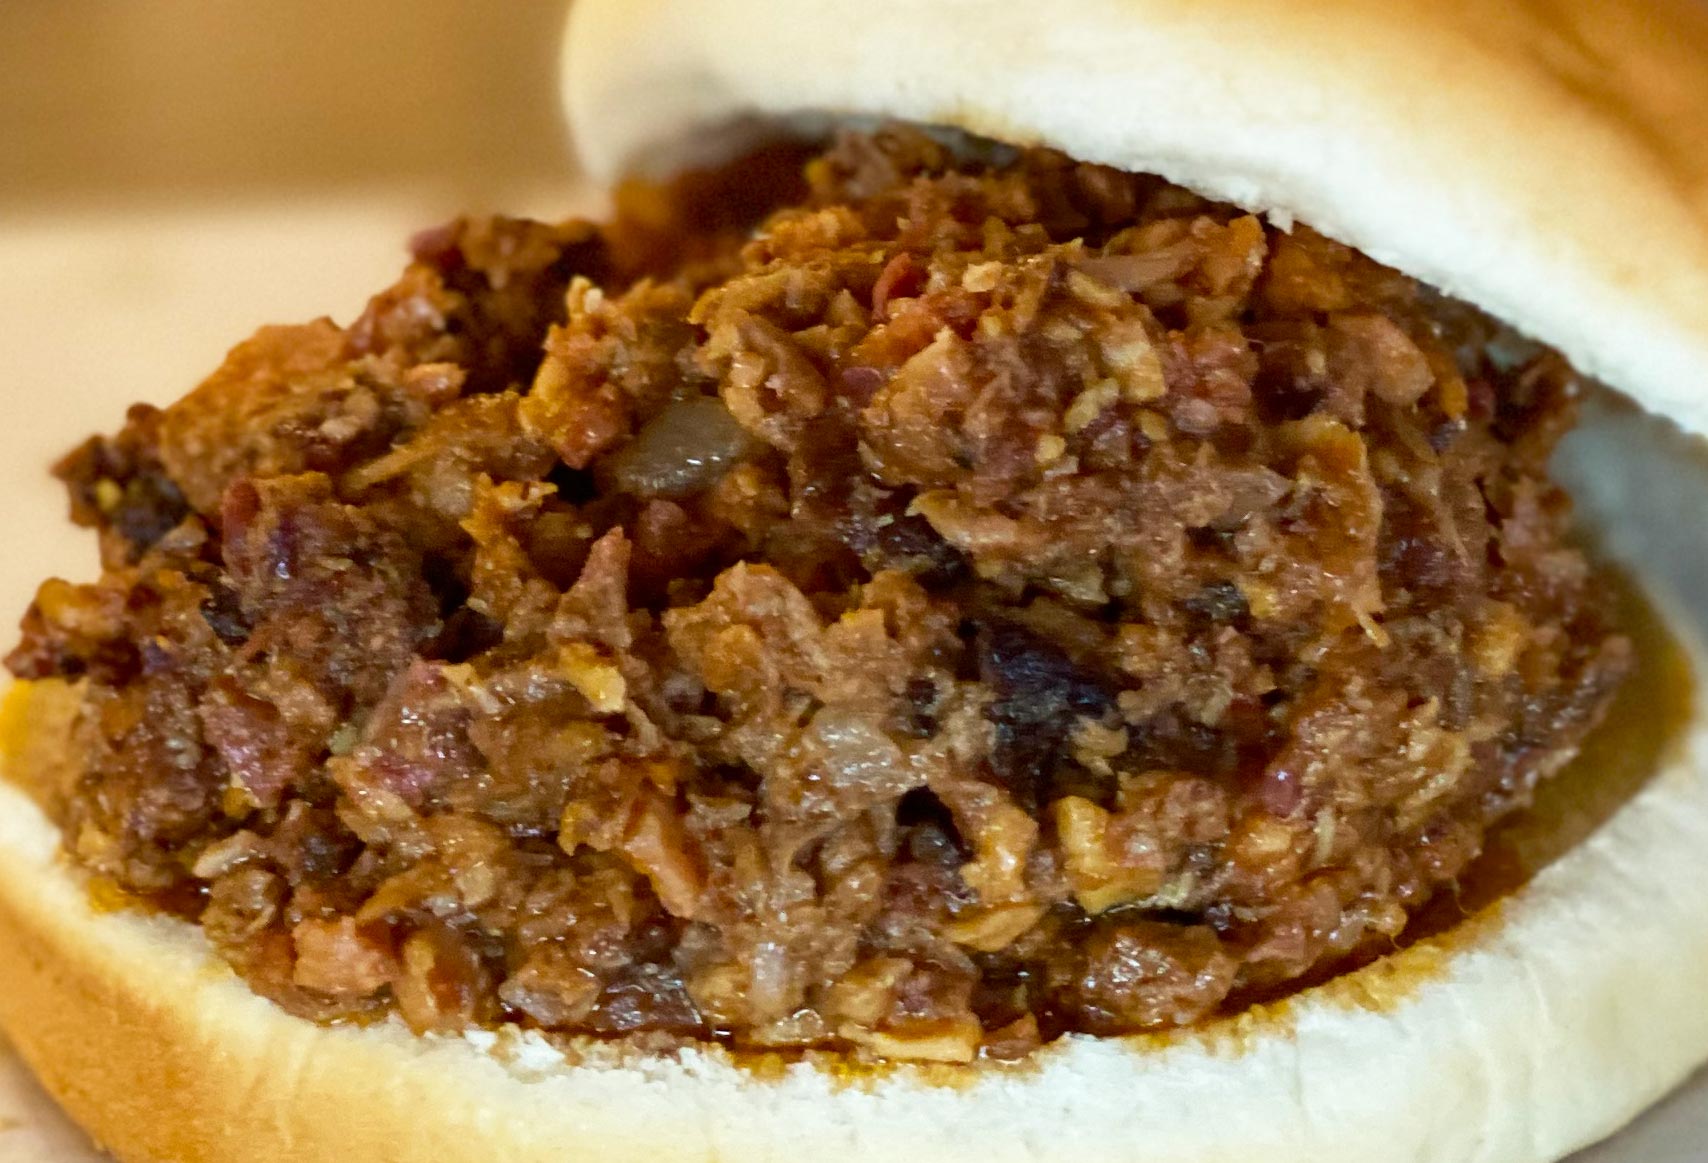 A closeup image of chopped BBQ on a bun